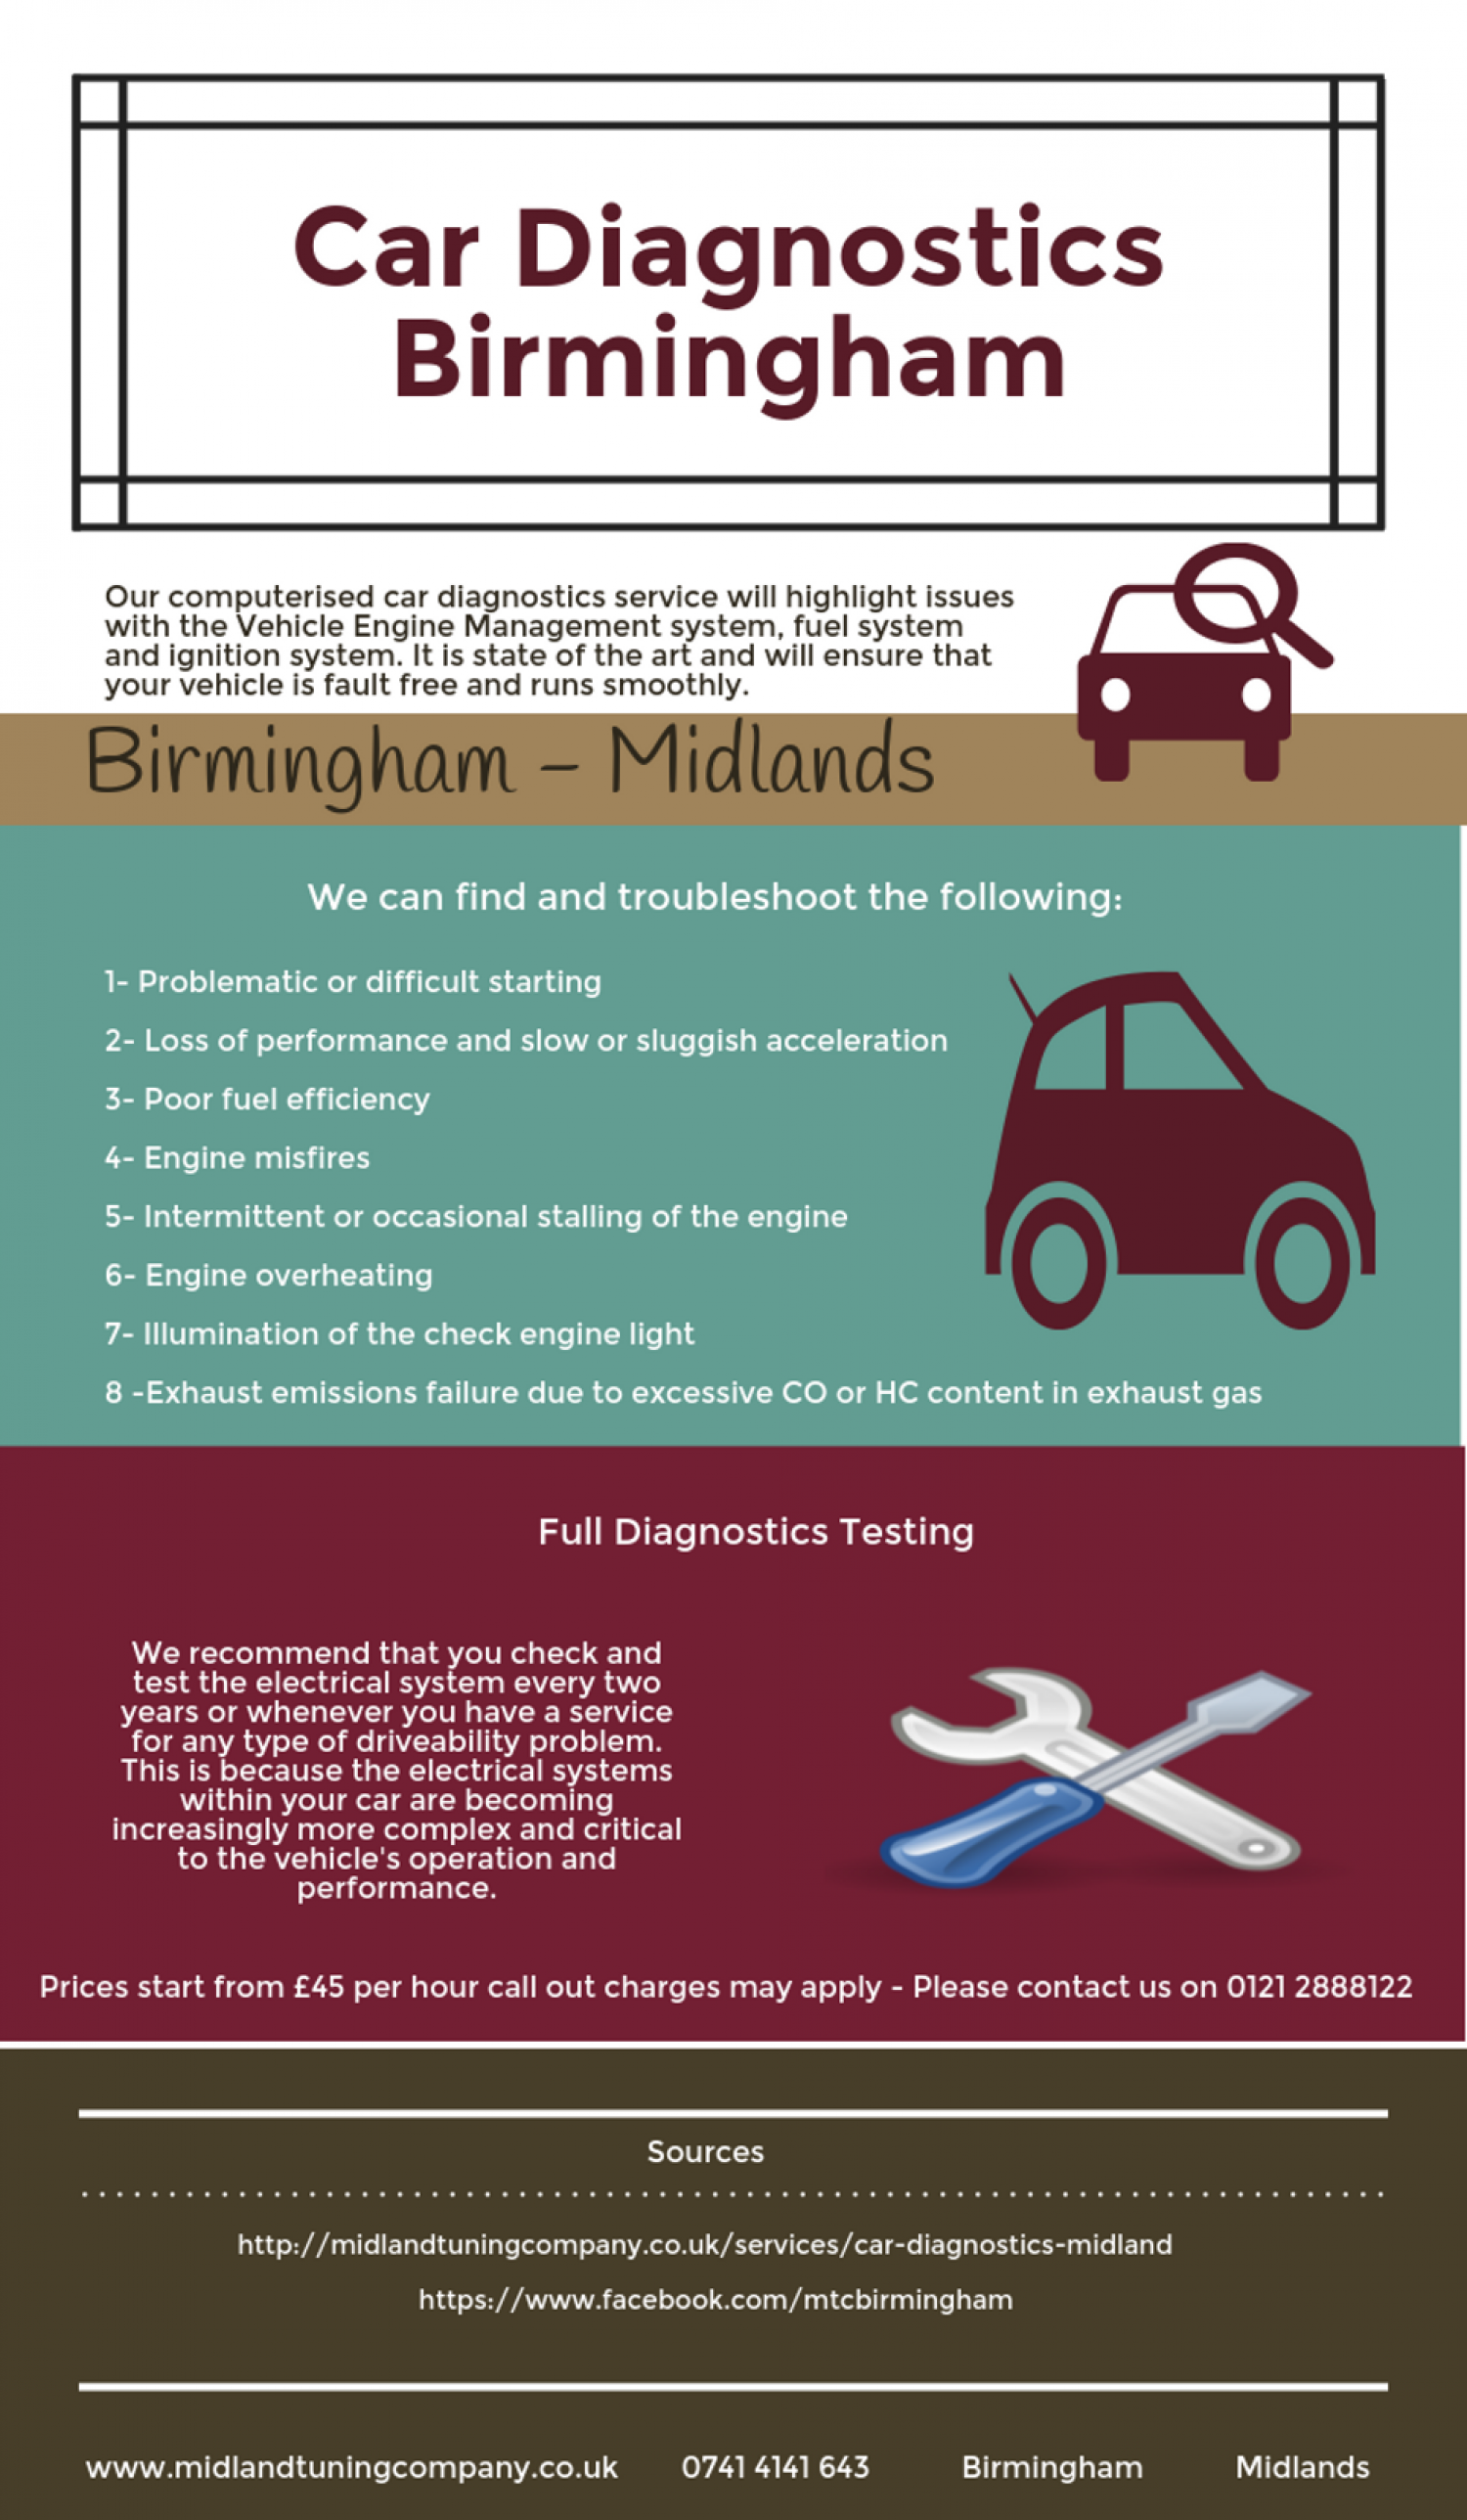 Car Diagnostics Specialists in Birmingham Infographic